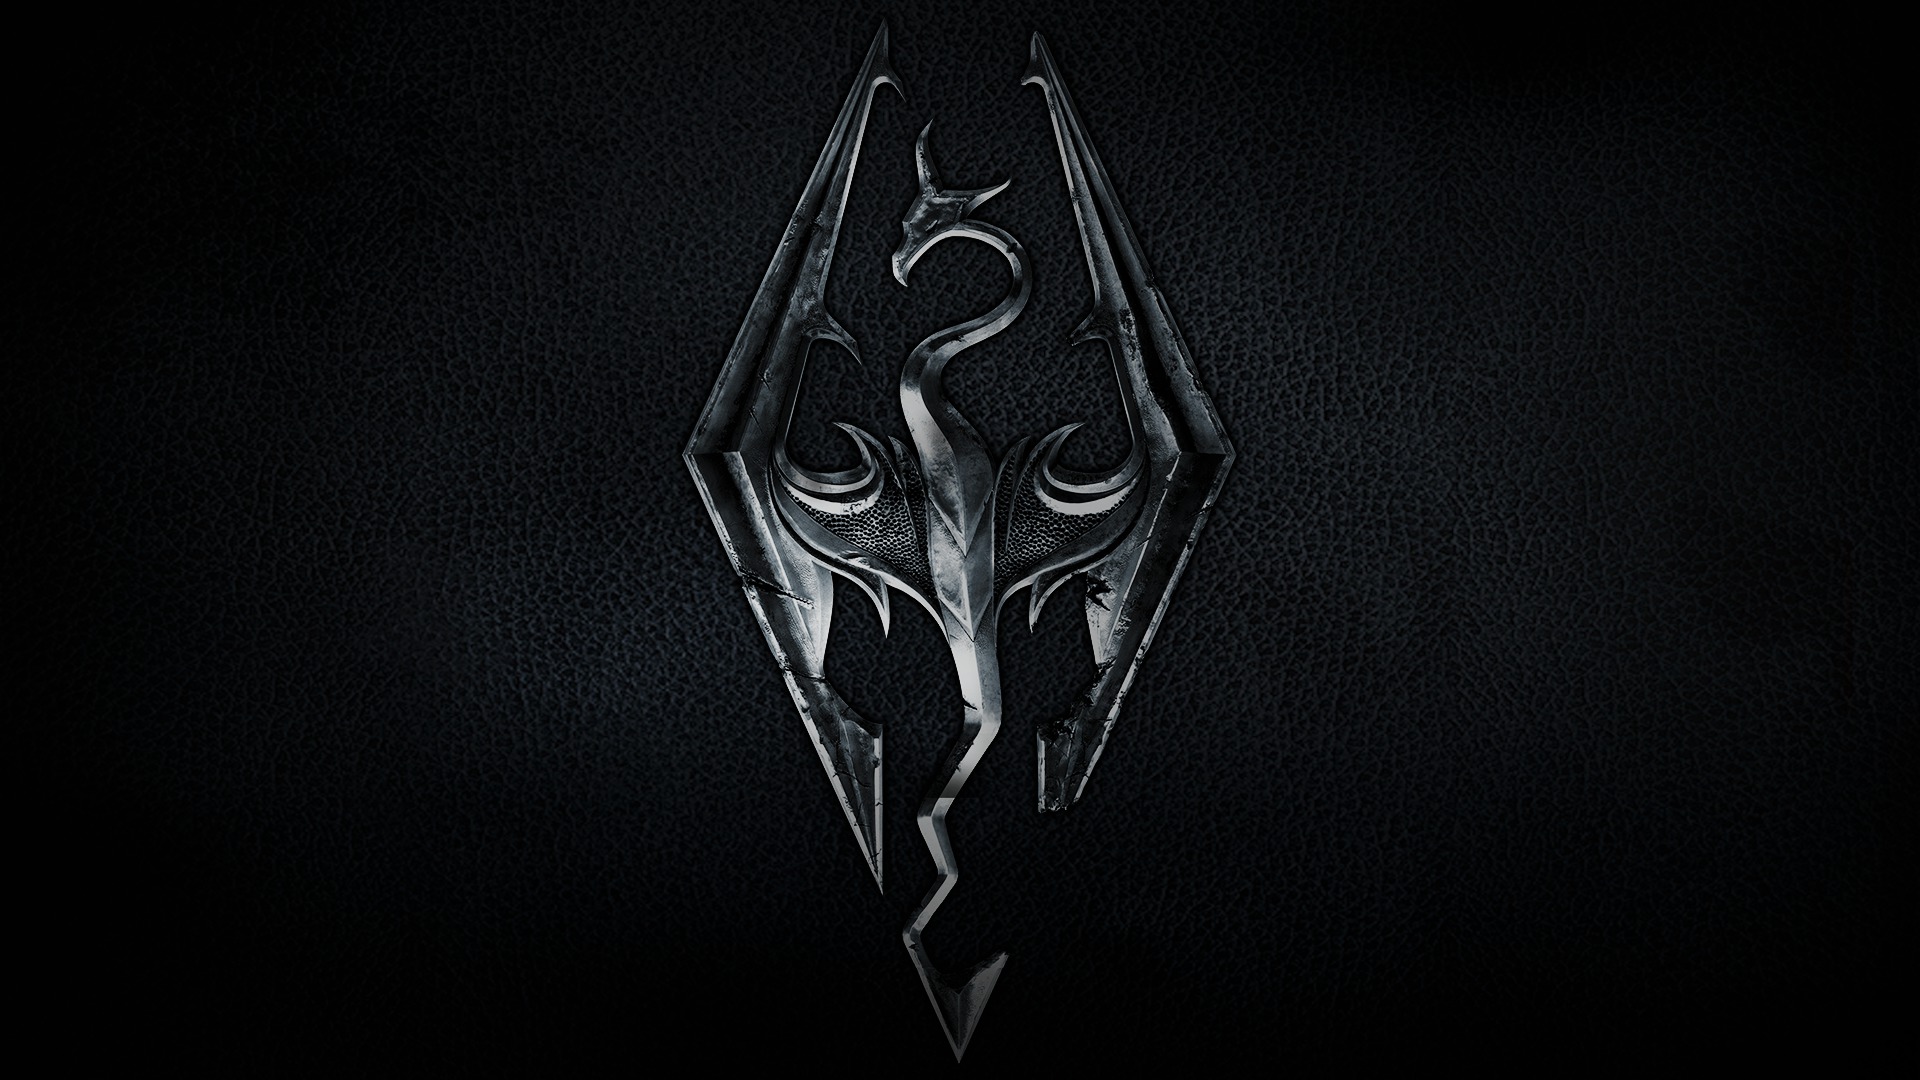 The Elder Scrolls V: Skyrim Special Edition free instals